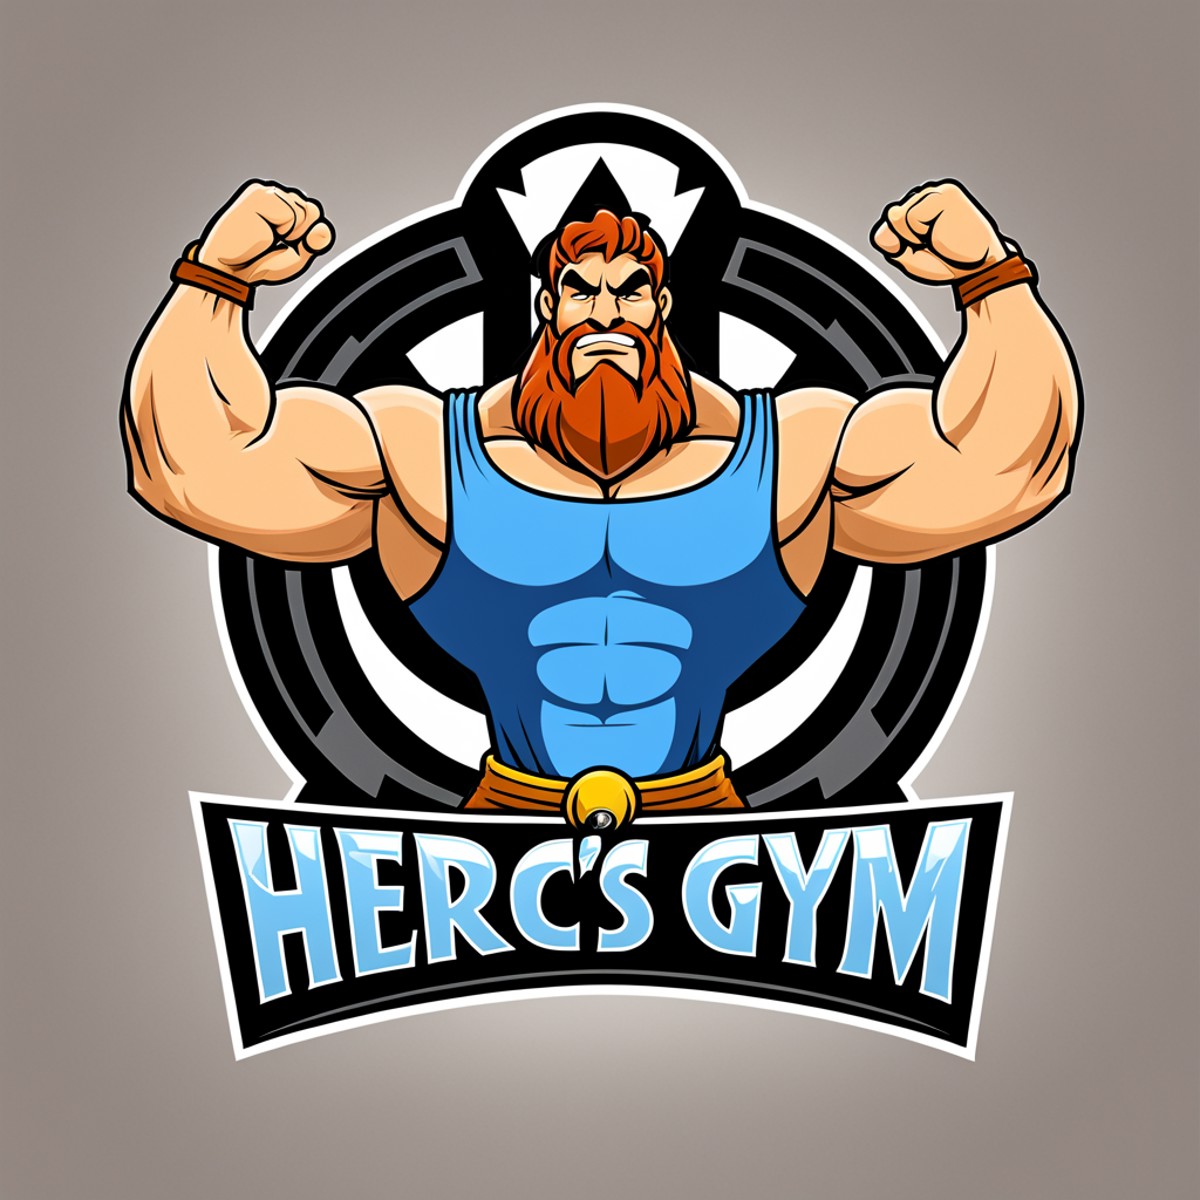 logomkrdsxl, logo for a gym featuring Hercules,  vector, text "Herc's Gym",  <lora:logomkrdsxl:1>, best quality, masterpie...